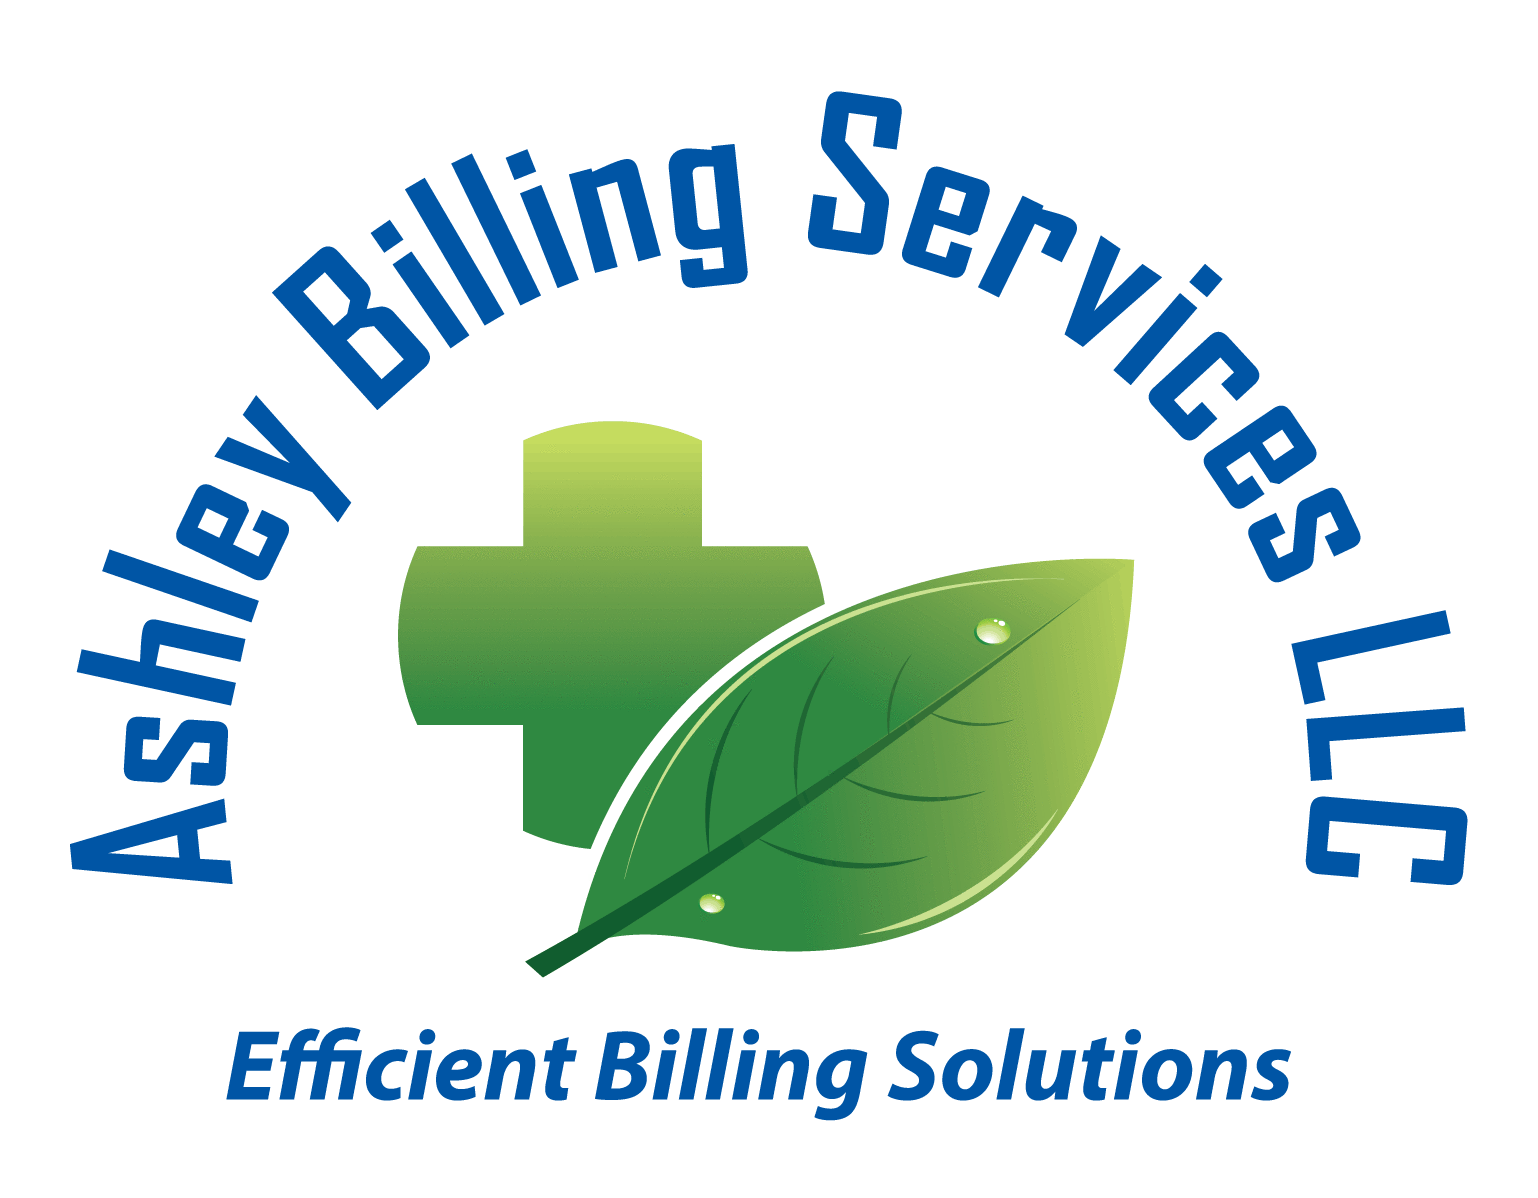 Ashley Billing Services